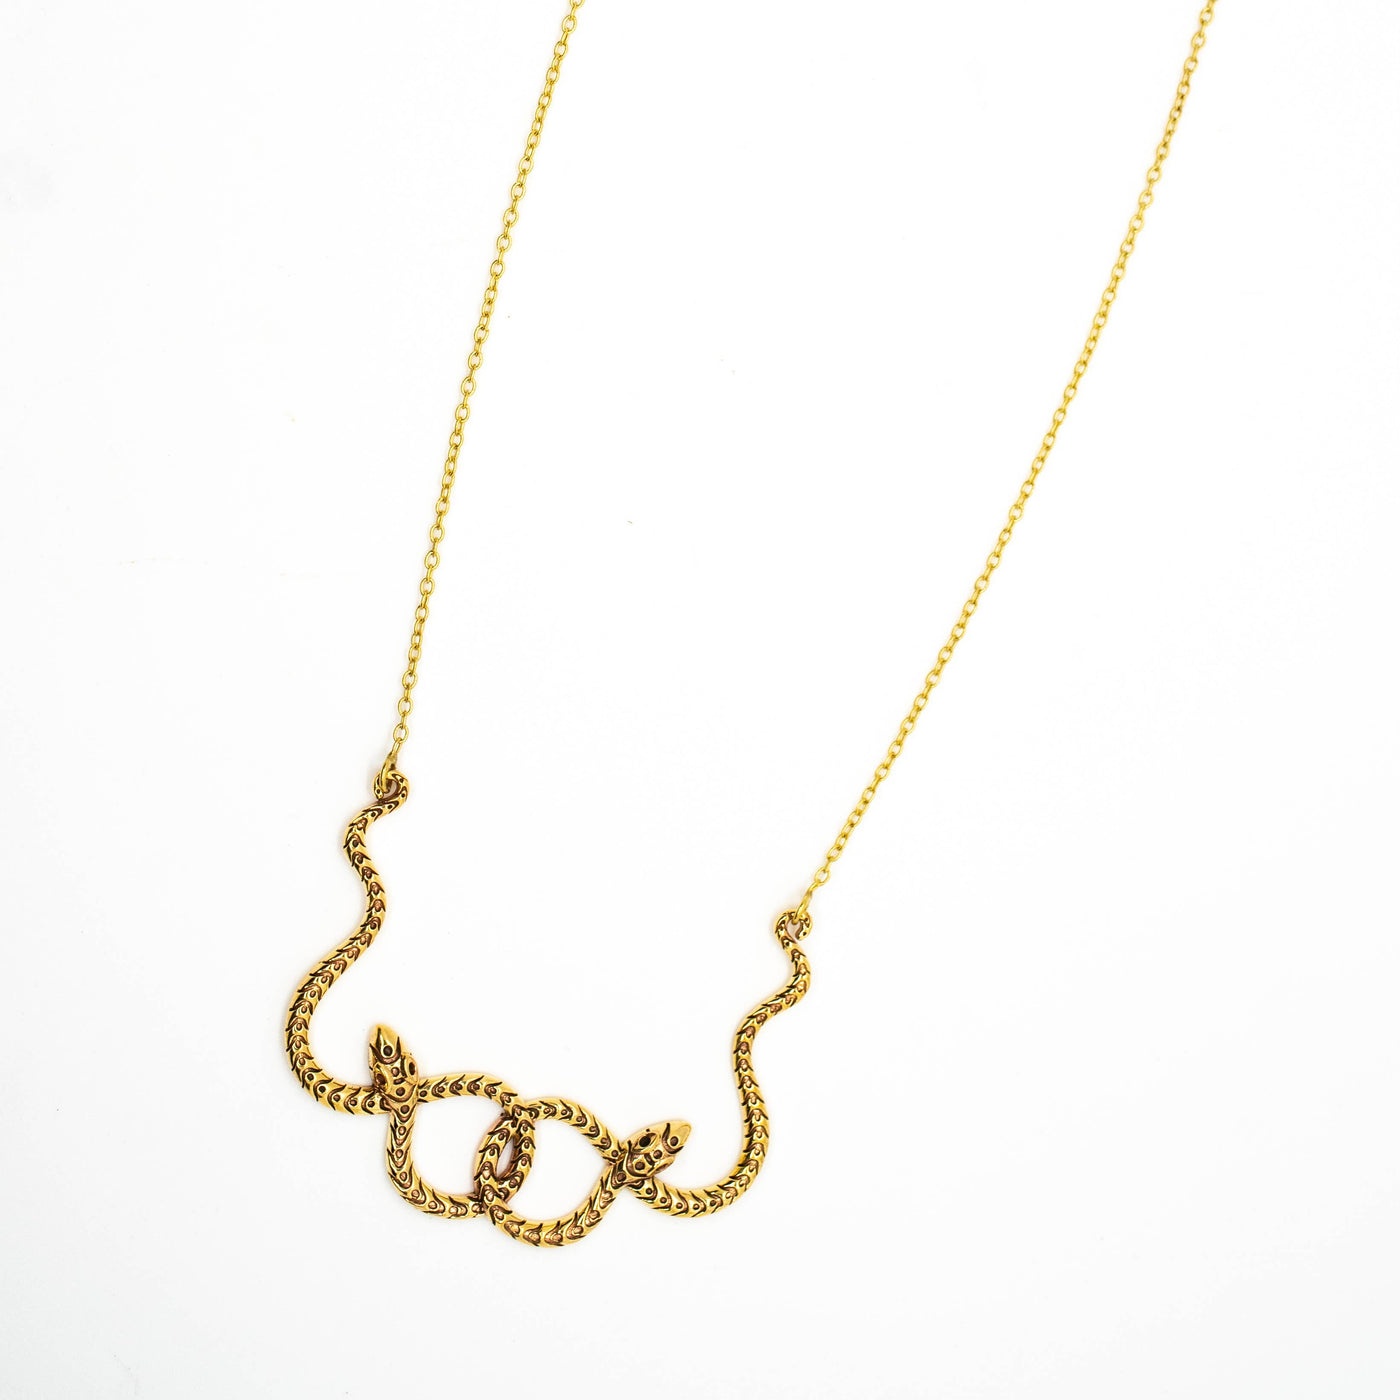 Baizaar Brass Entwined Snake Necklace - Simple Good